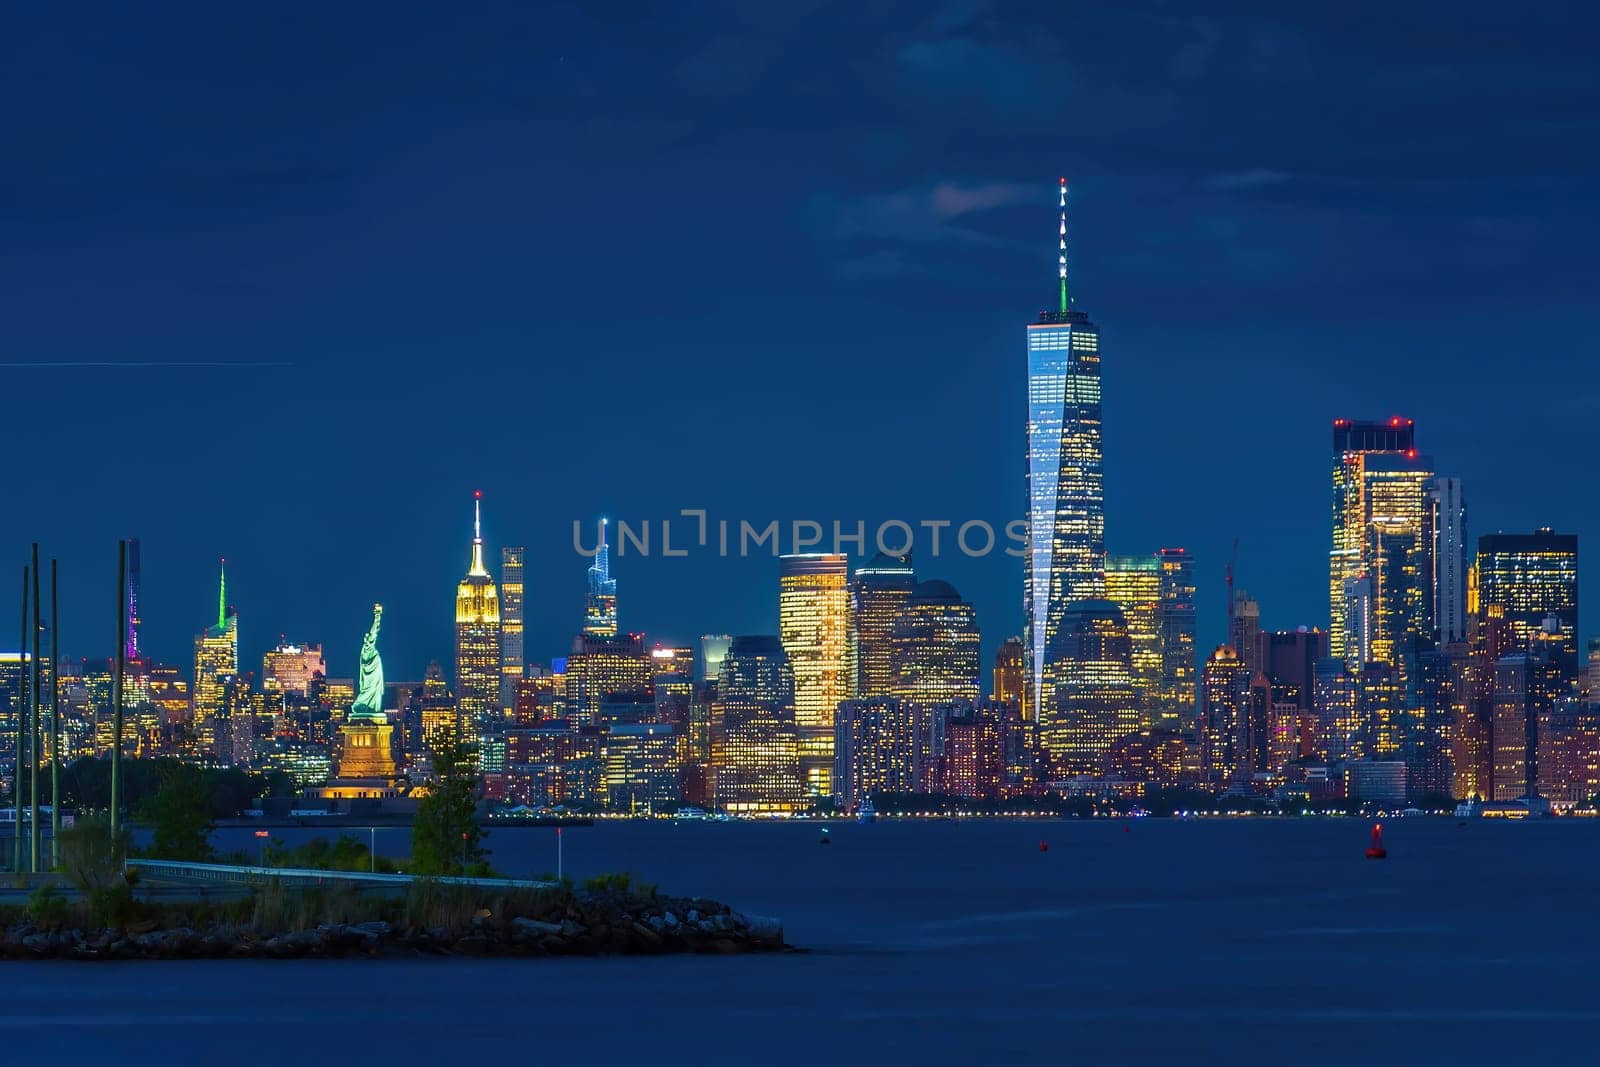 Manhattan's skyline, cityscape of New York City by f11photo